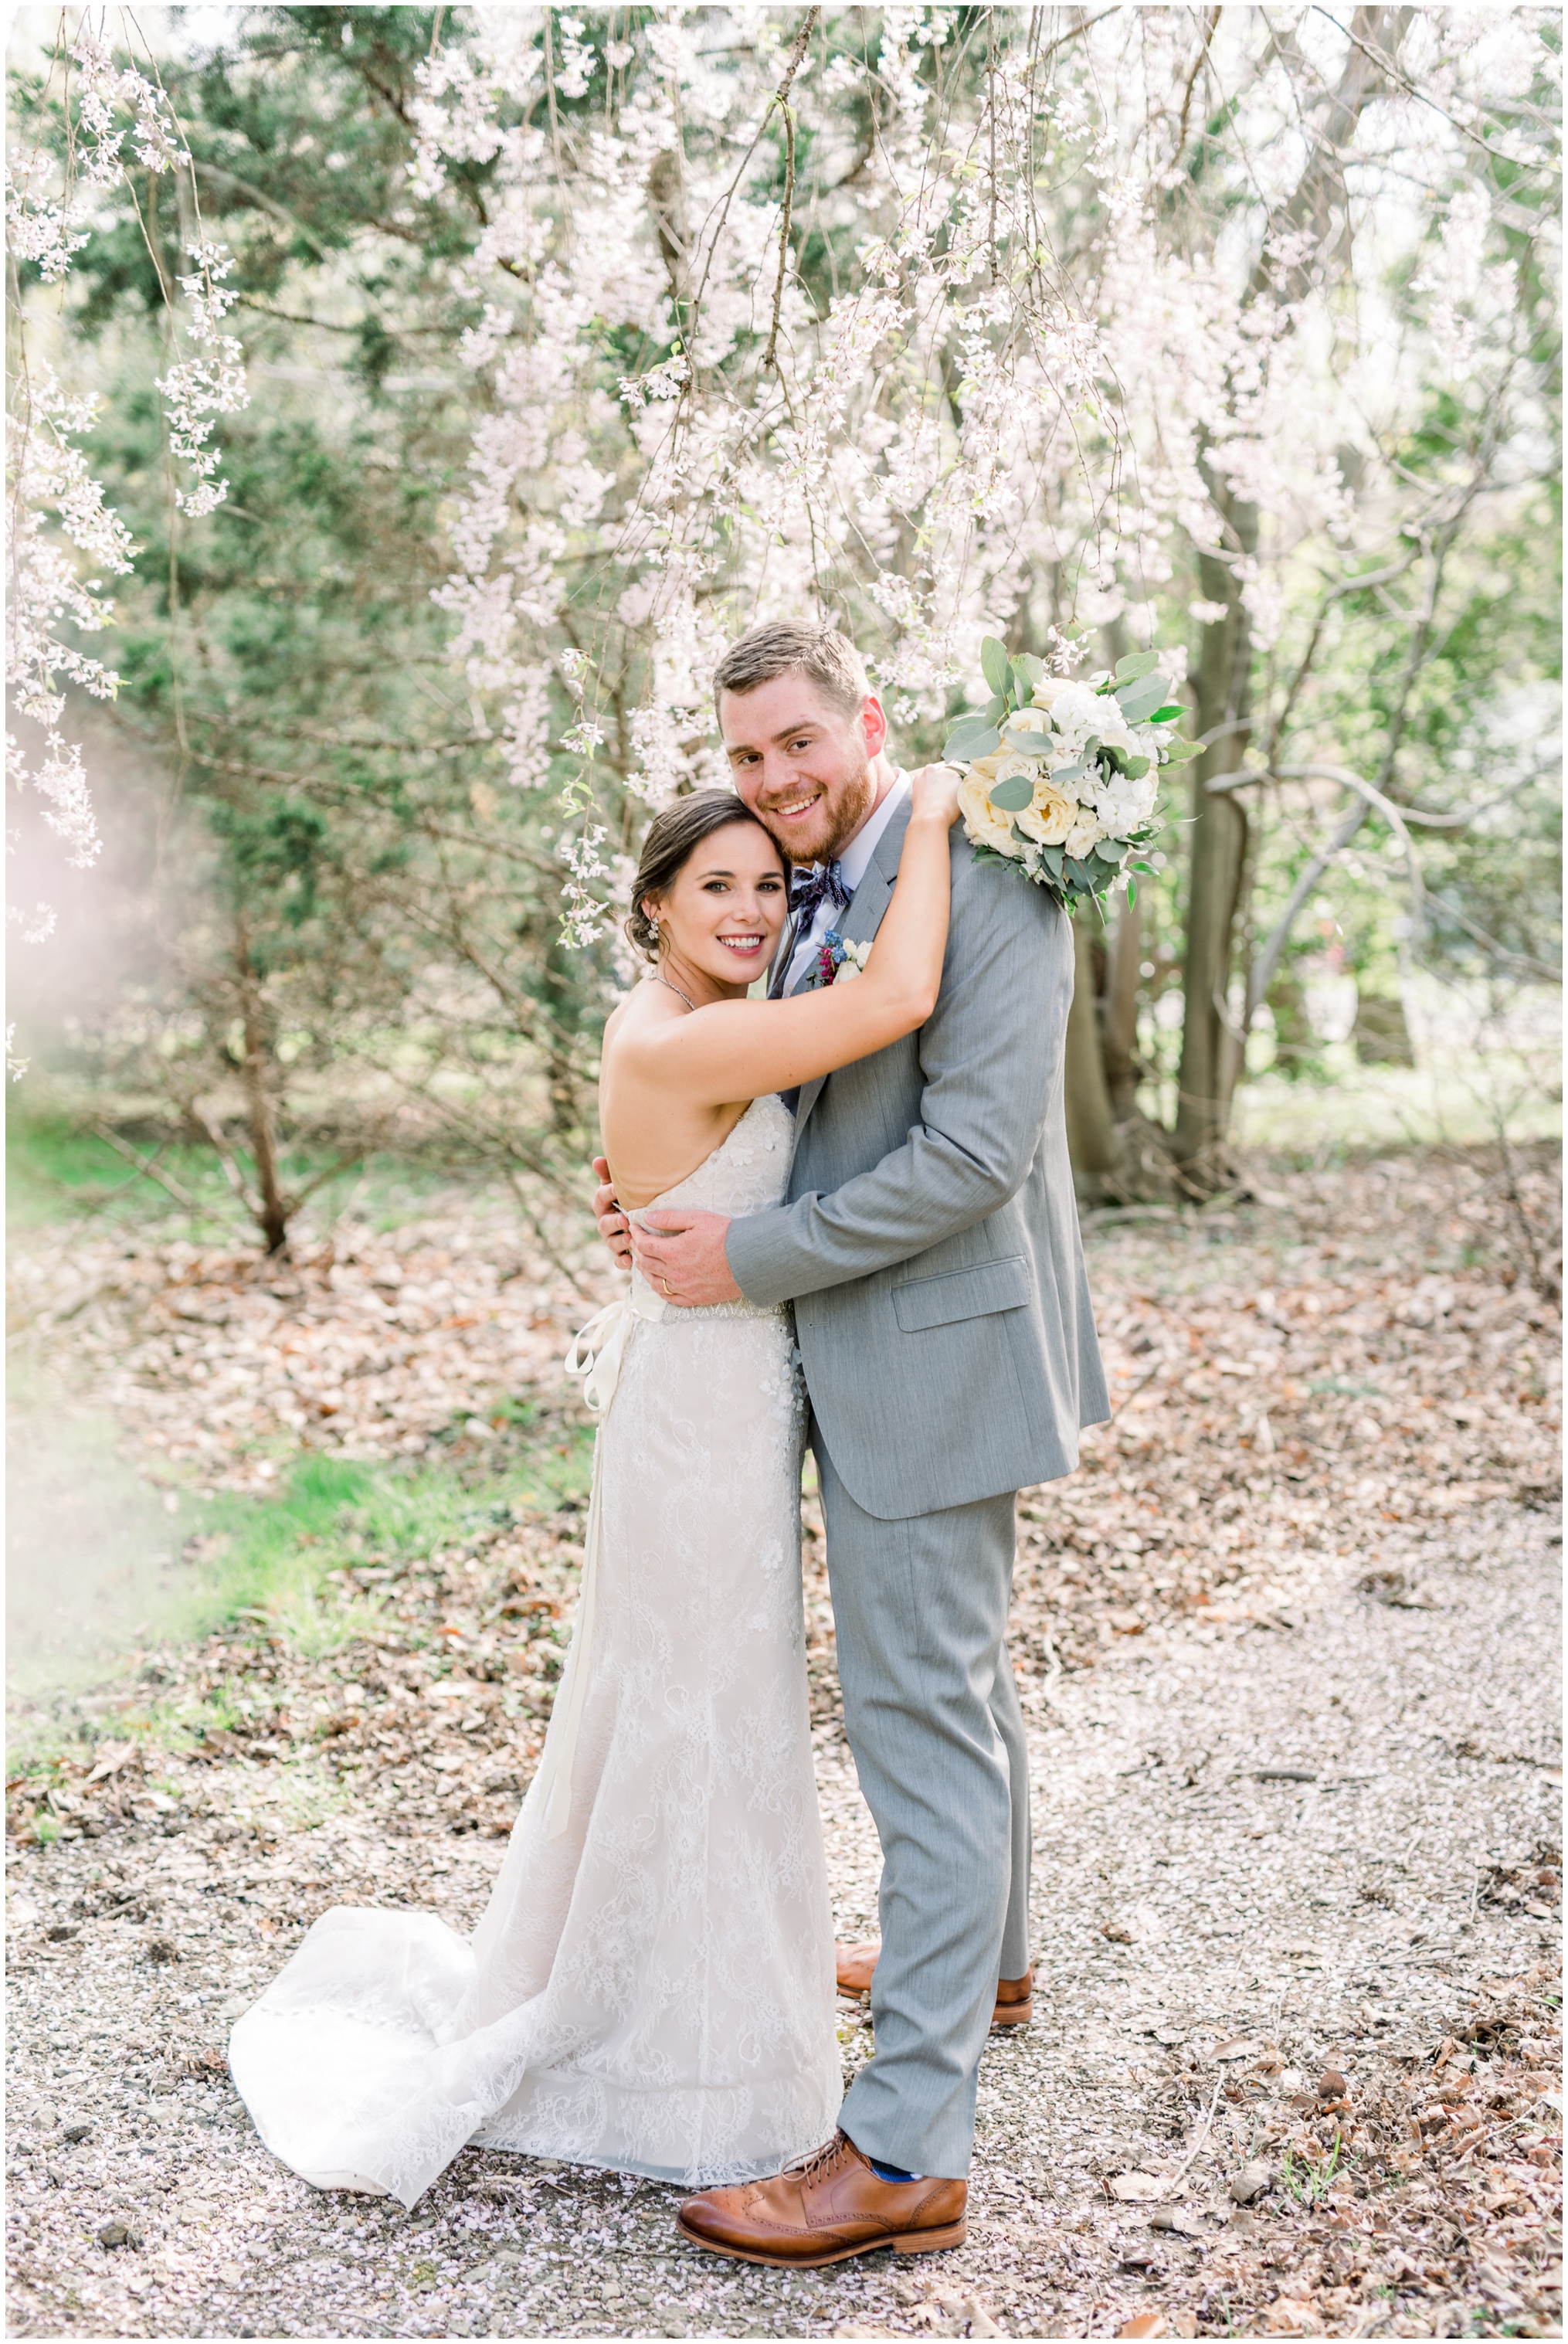 Krista Brackin Photography | April Wedding at The Carriage House at Rockwood Park_0070.jpg